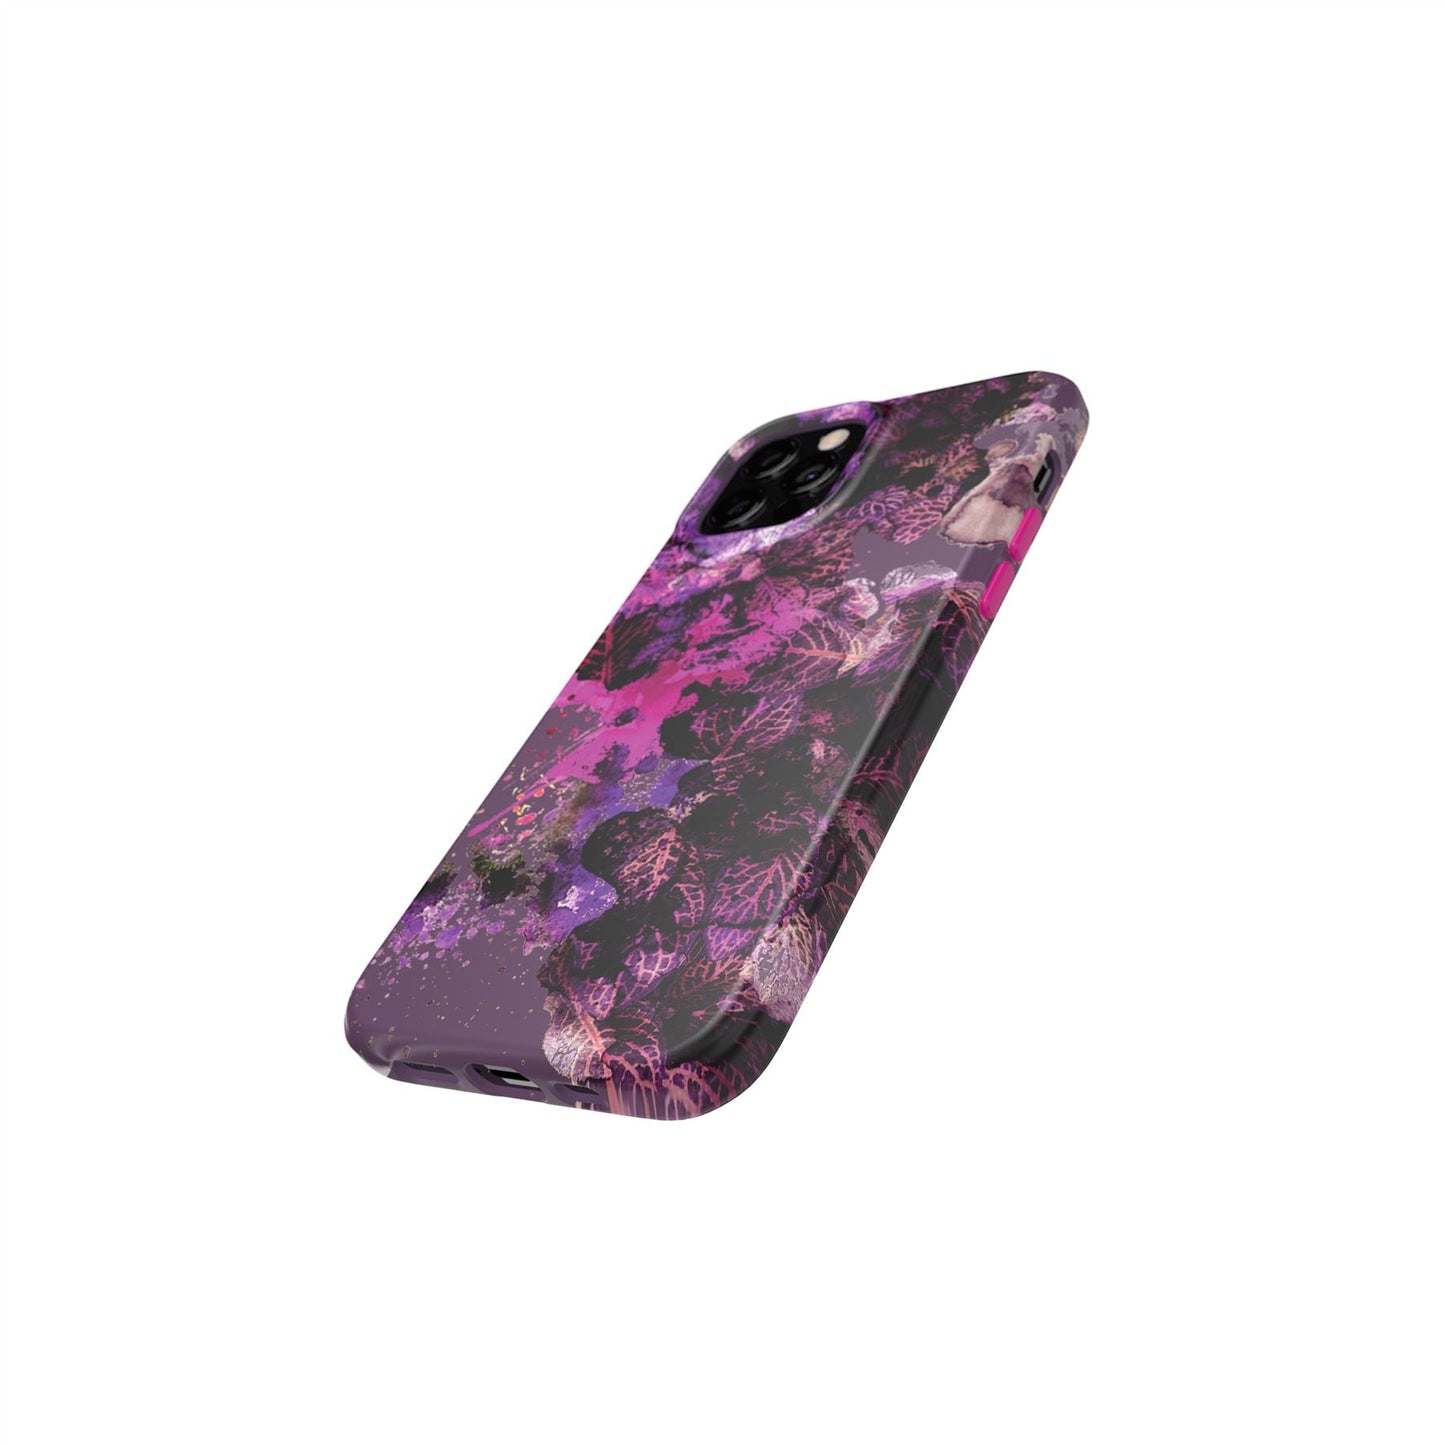 Evo Art Cover Purple for iPhone 12 Pro